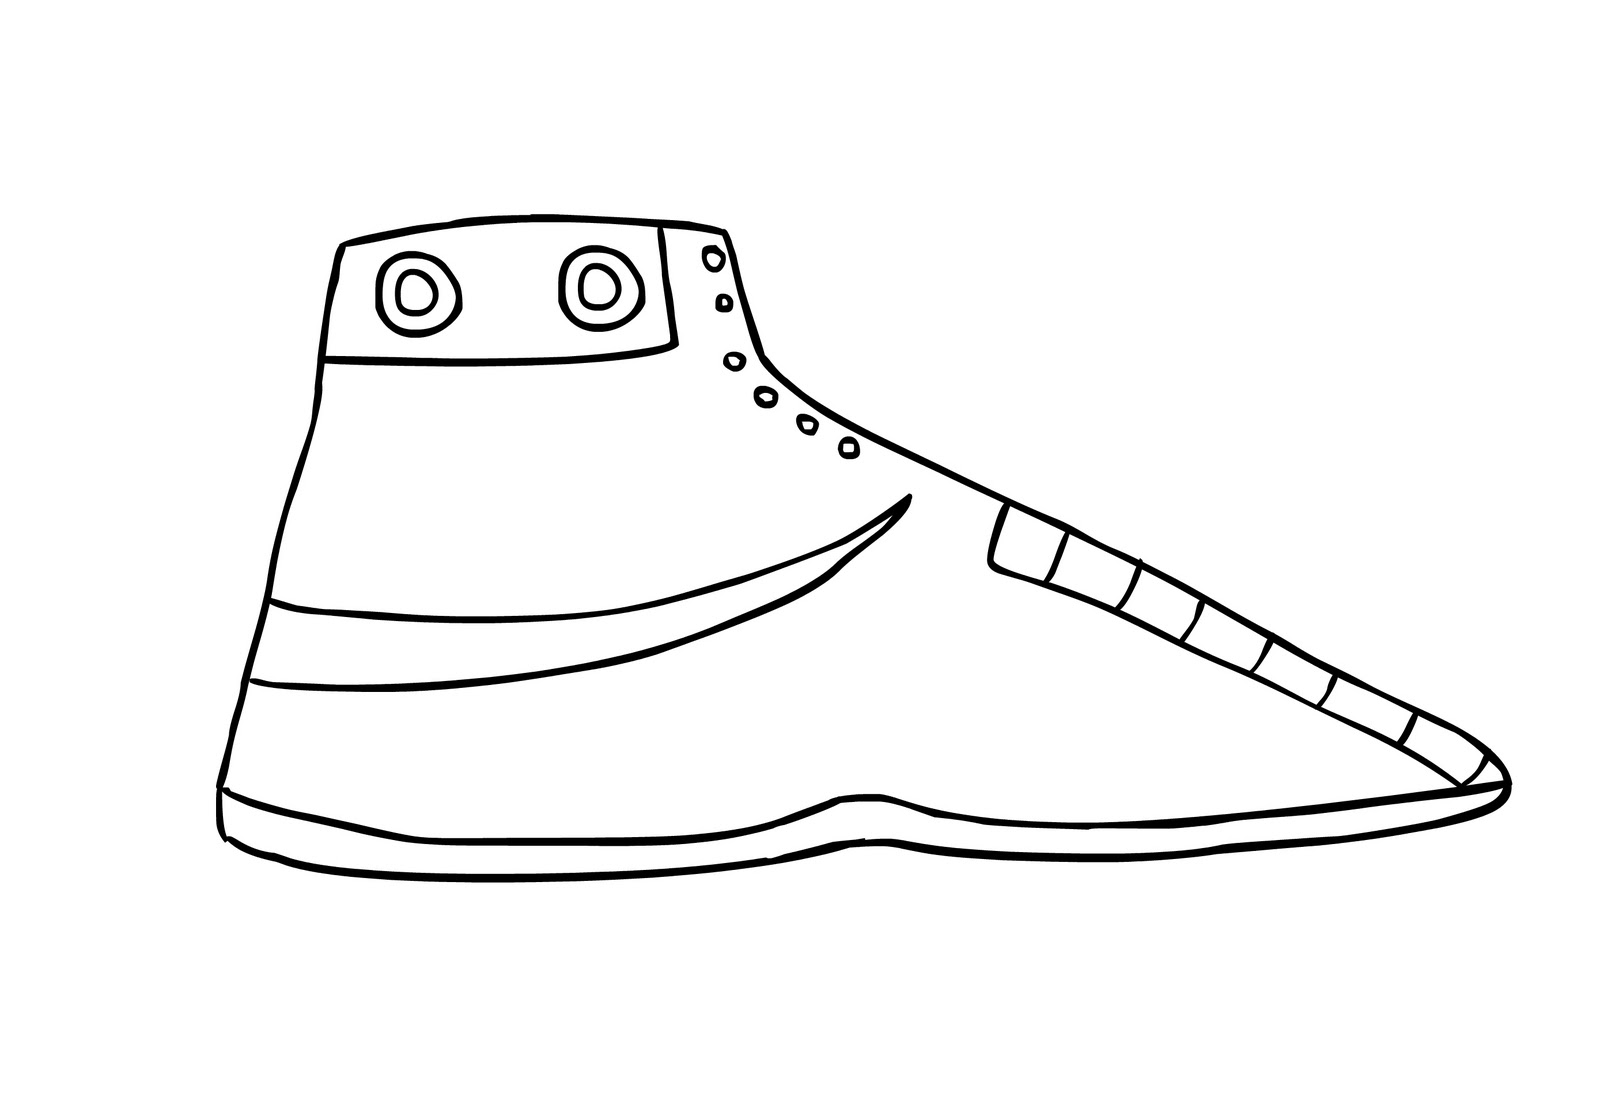 Como dibujar un zapato - Imagui